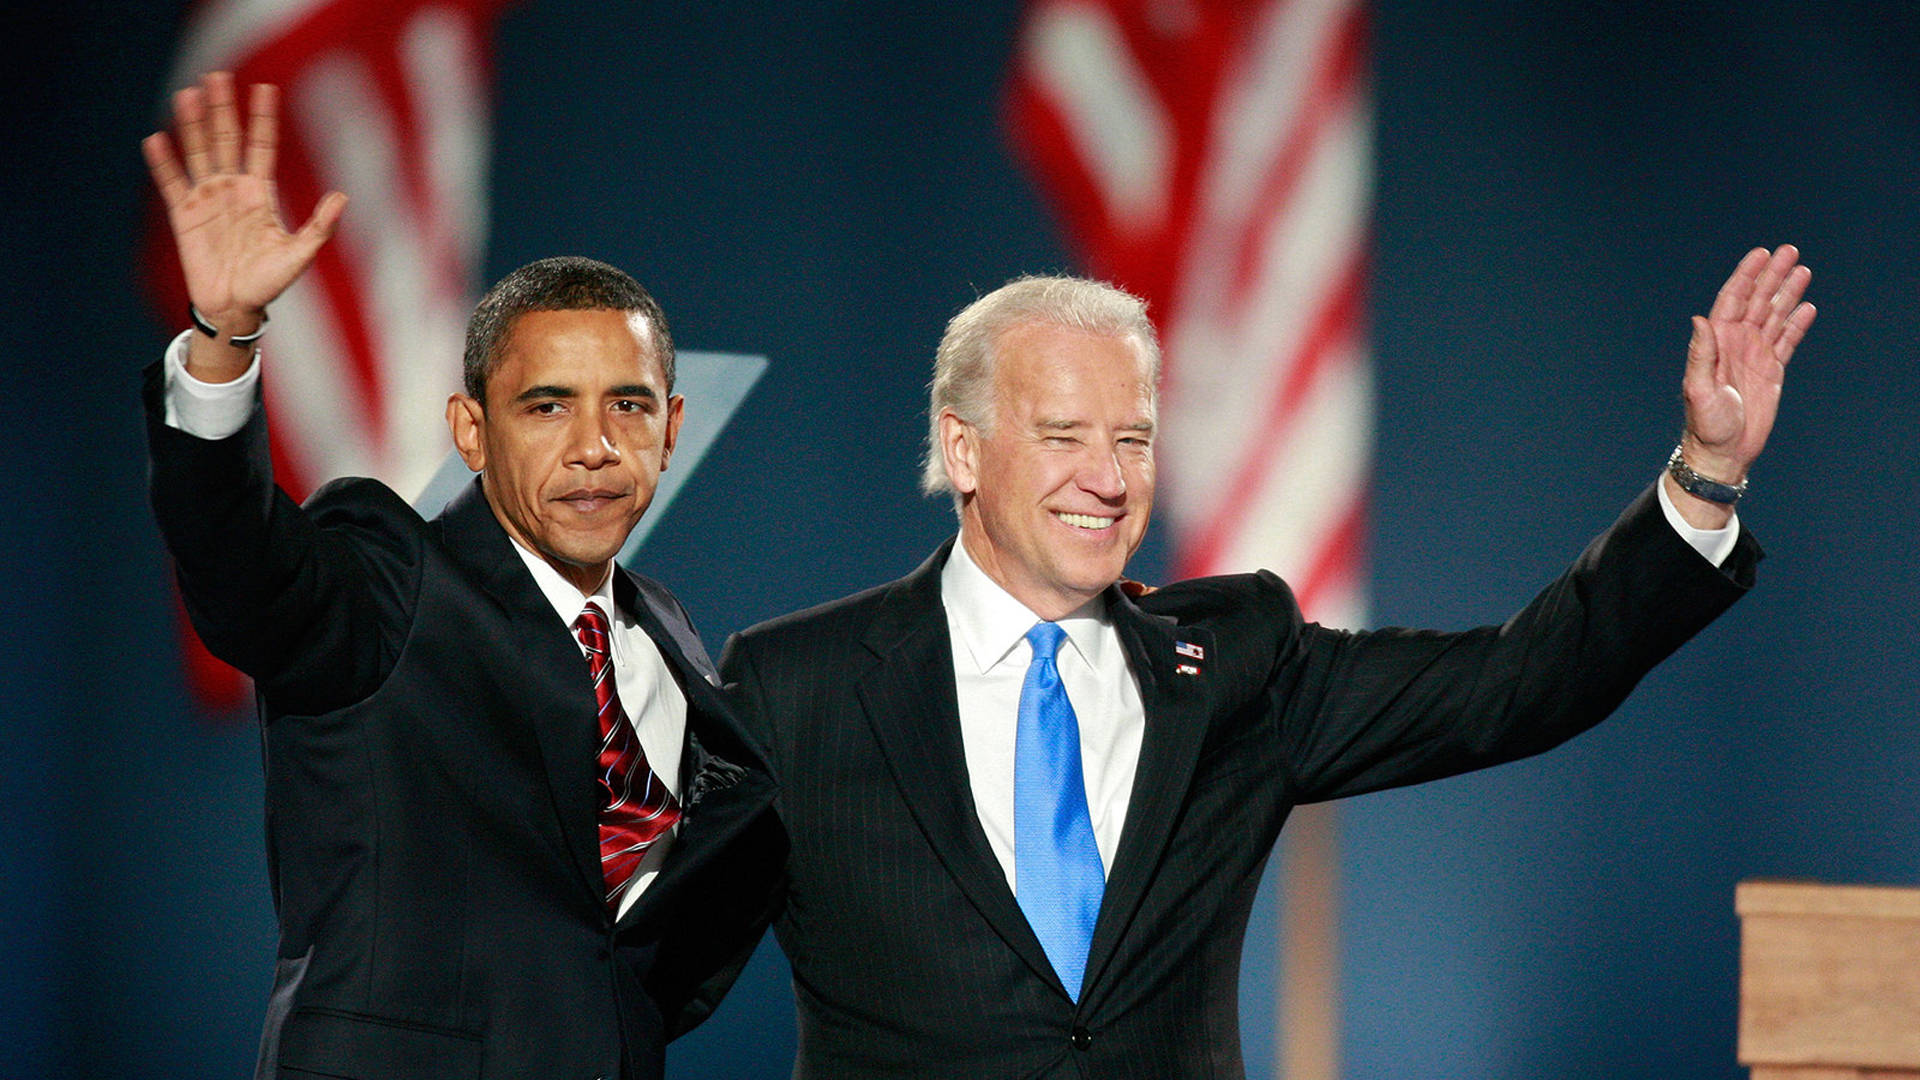 Download AmazingJoe Biden And Barrack Obama Wallpaper